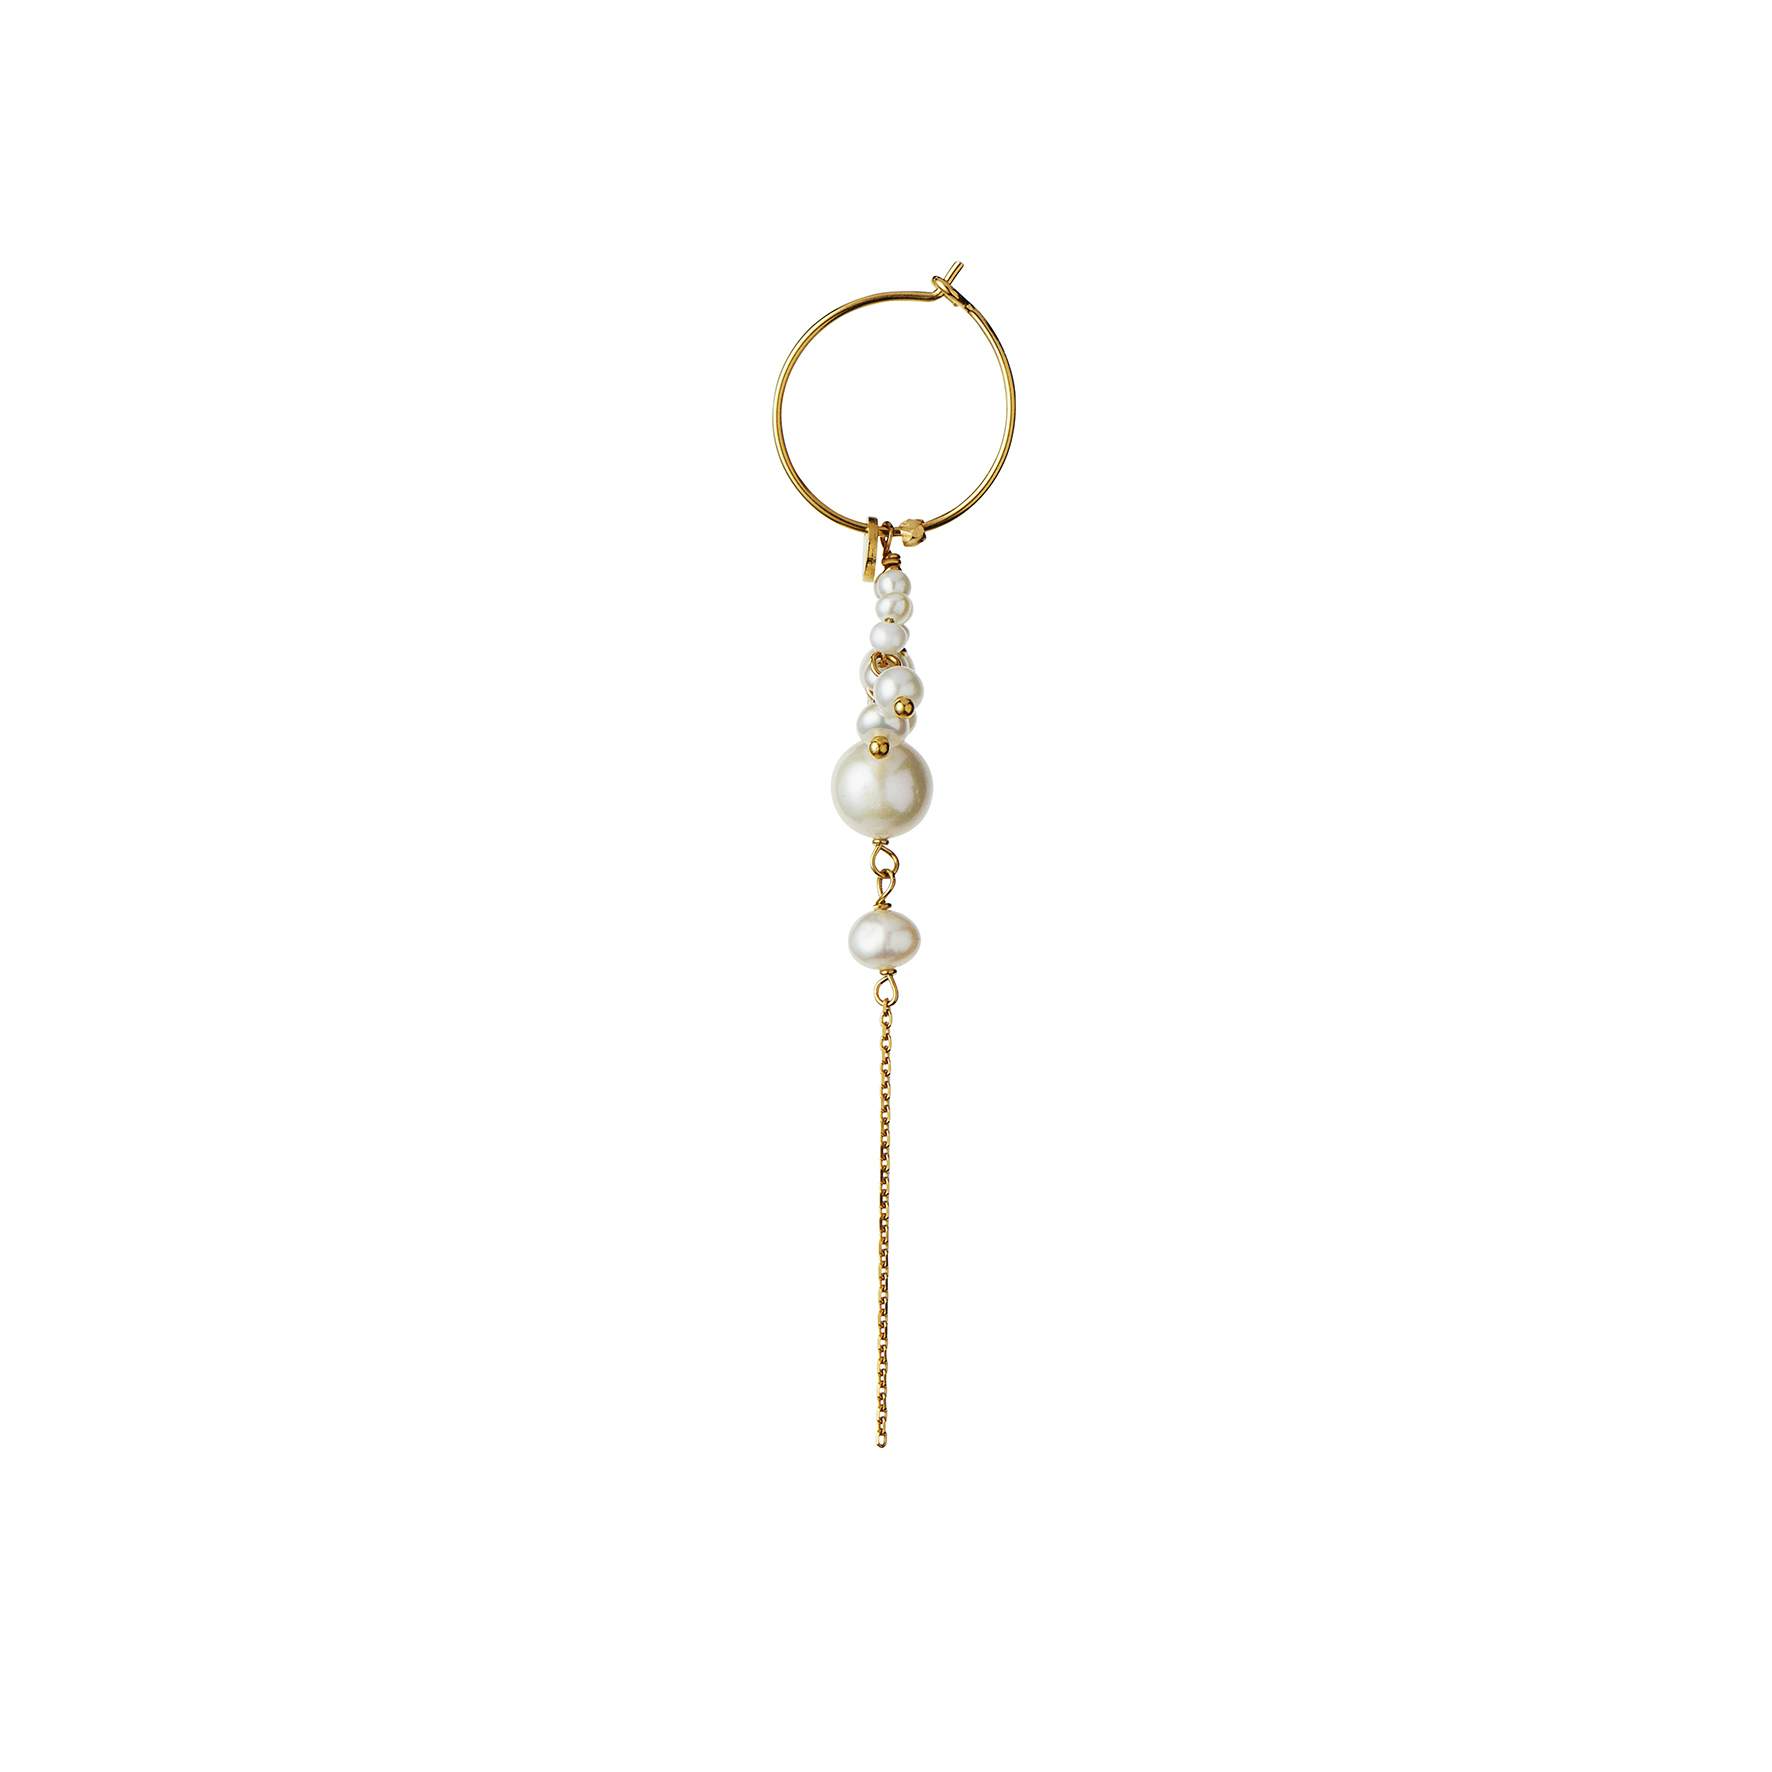 Heavenly Pearl Dream Hoop White Pearls & Chain von STINE A Jewelry in Vergoldet-Silber Sterling 925